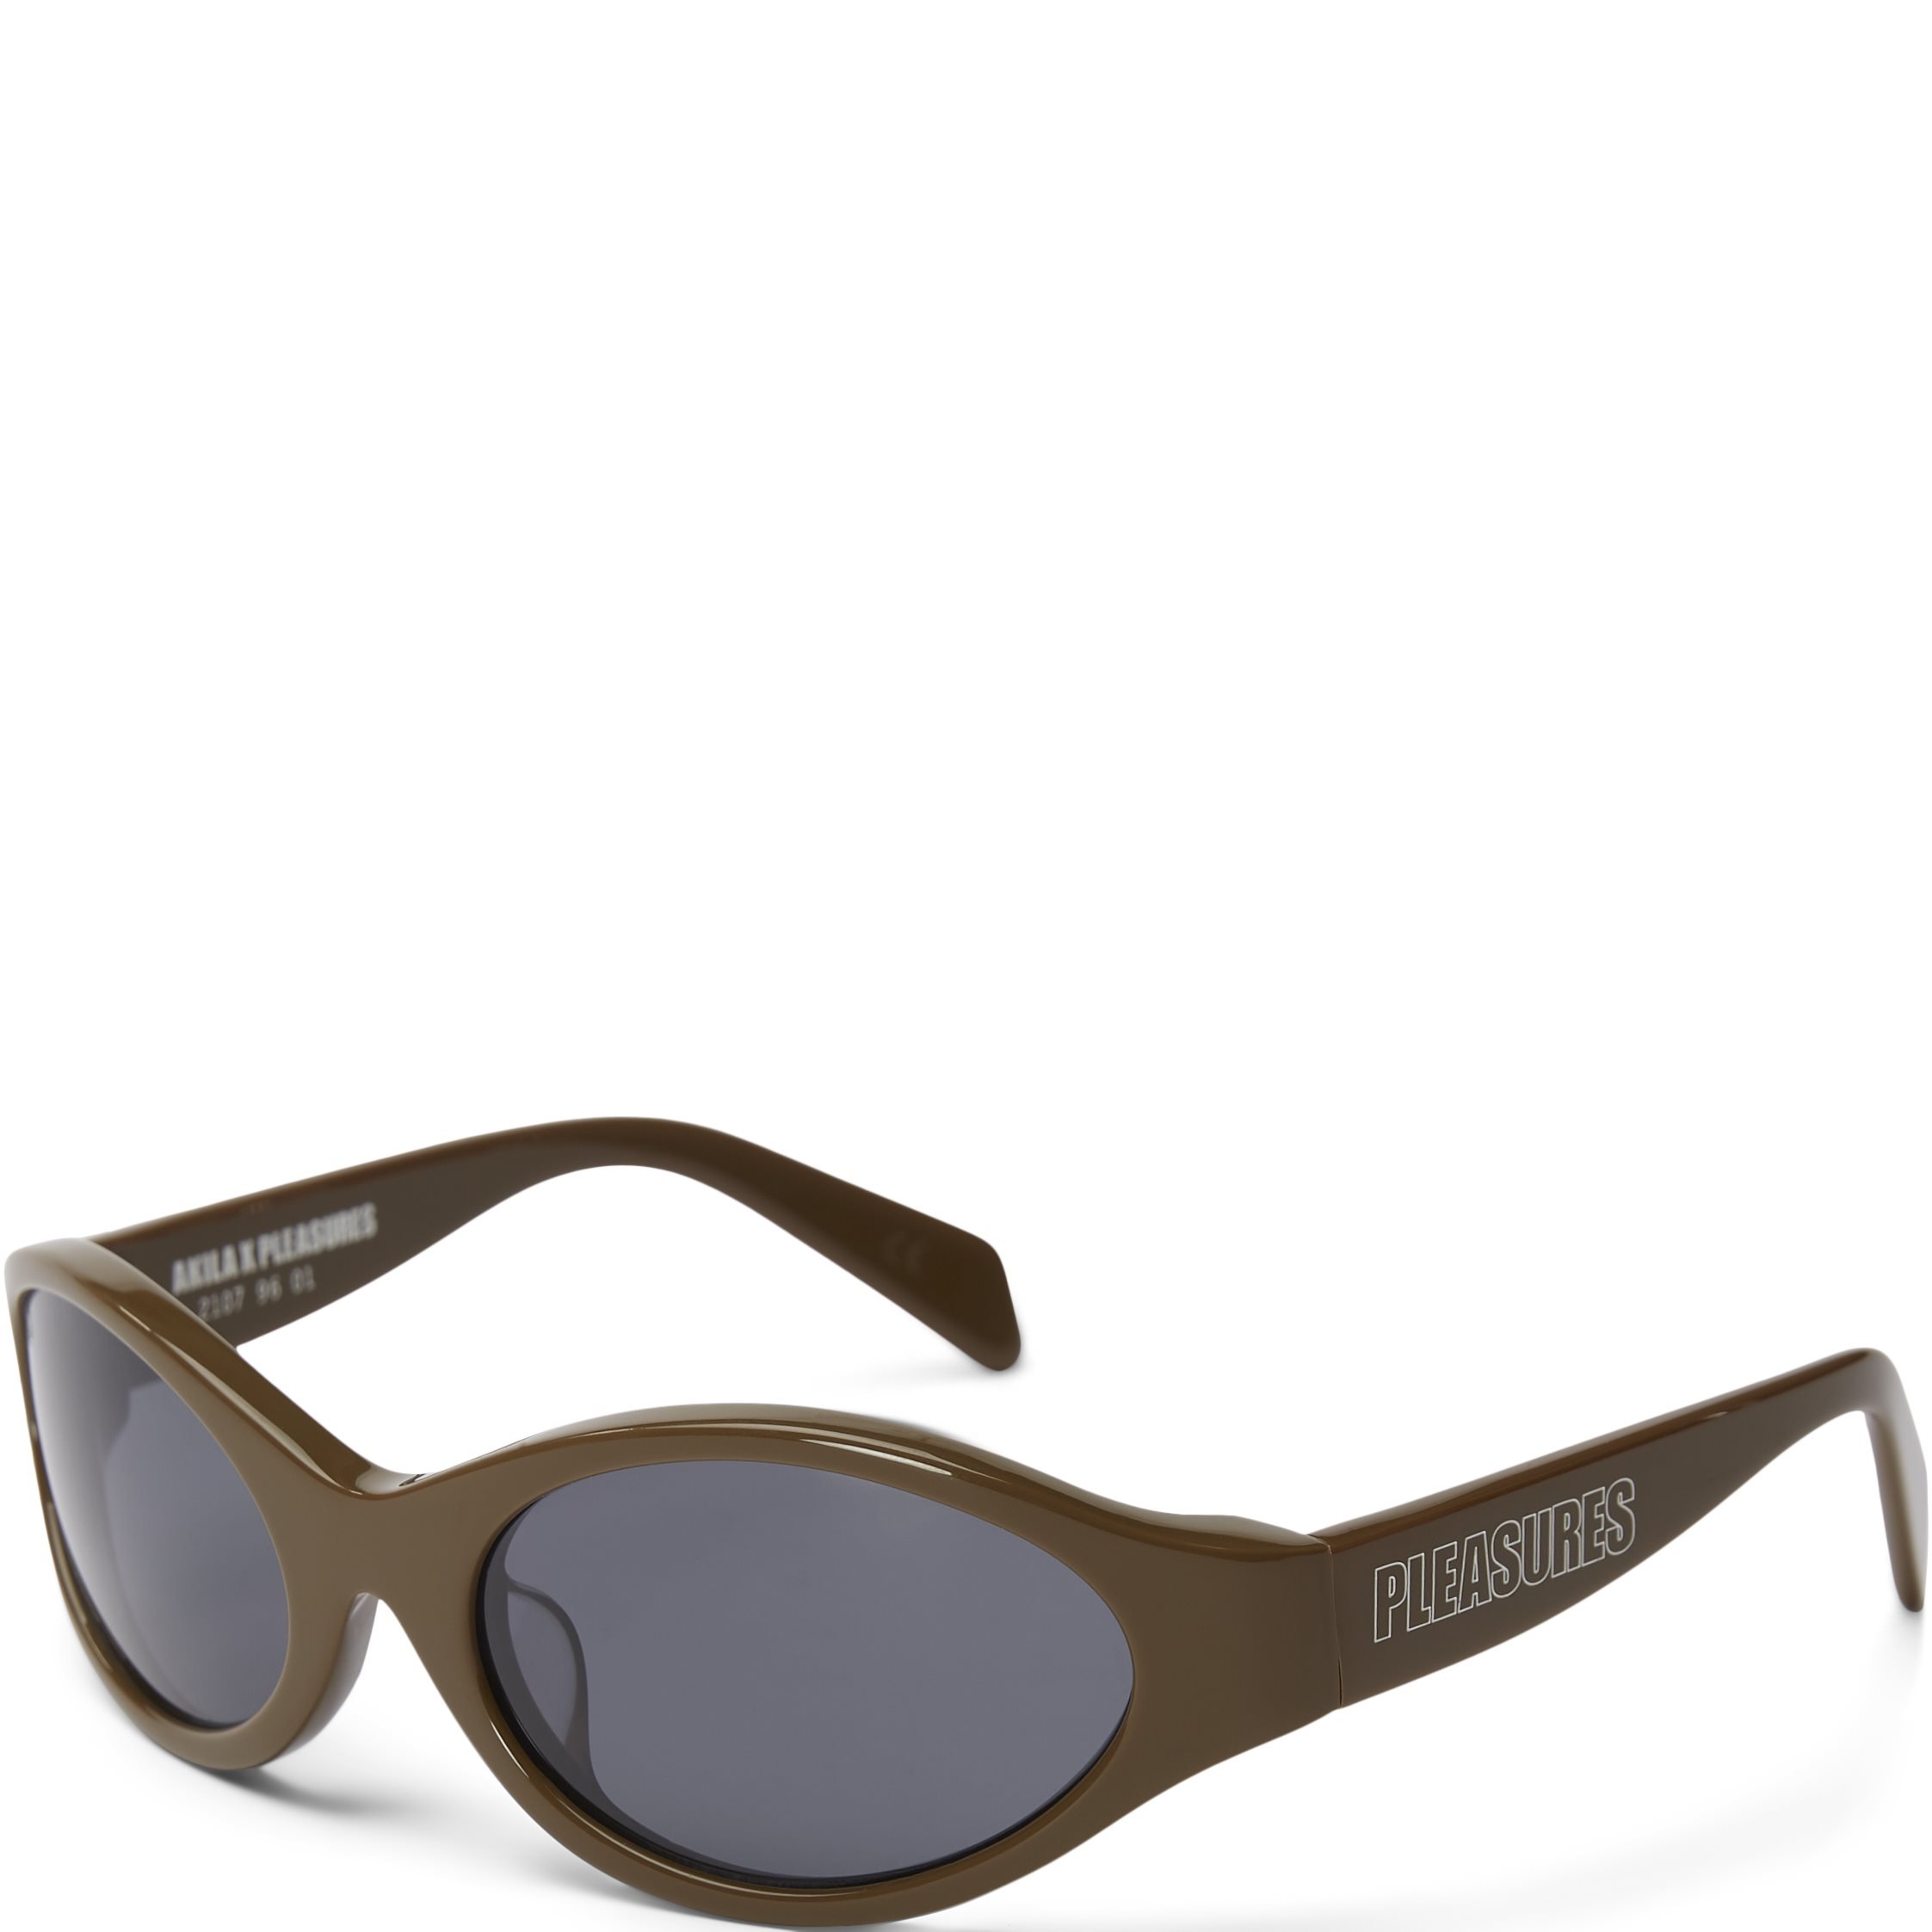 Reflex solglasögon - Accessoarer - Brun